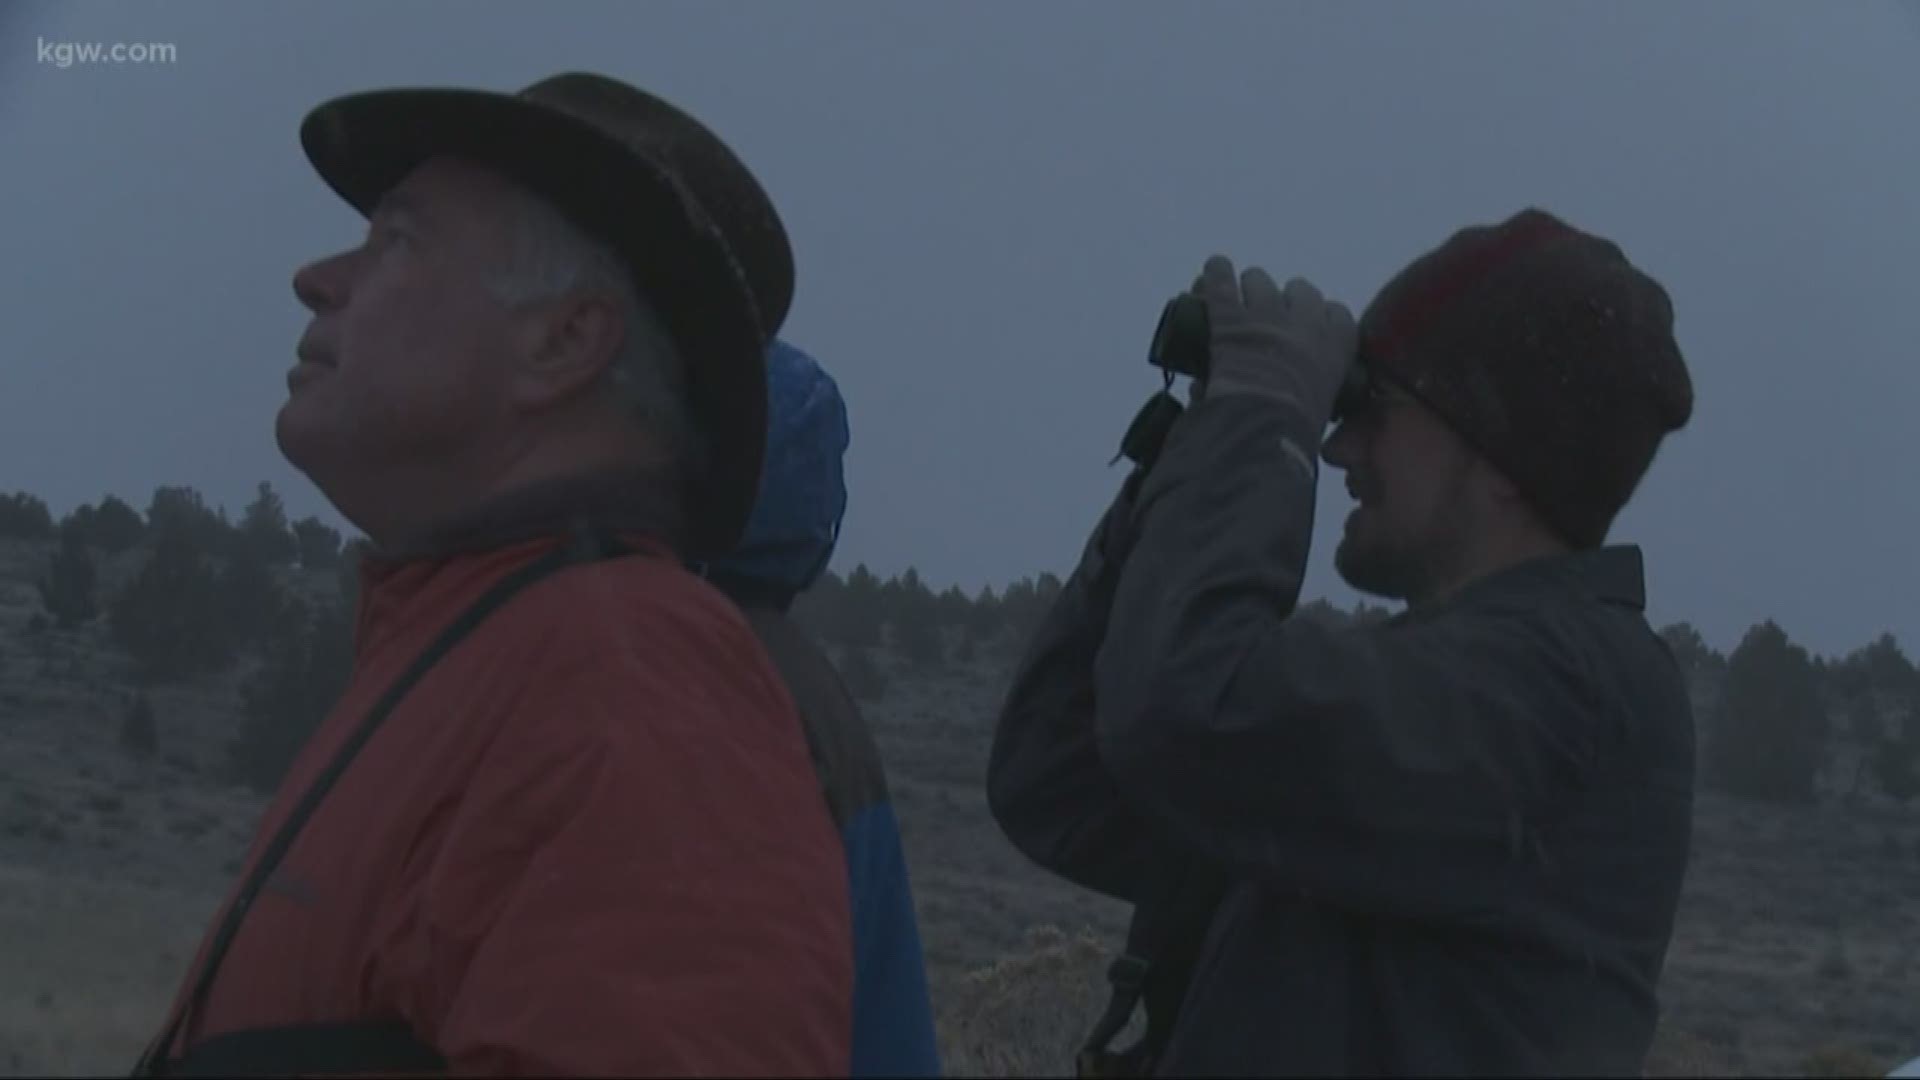 Grant takes us eagle watching in Oregon's Klamath Basin.